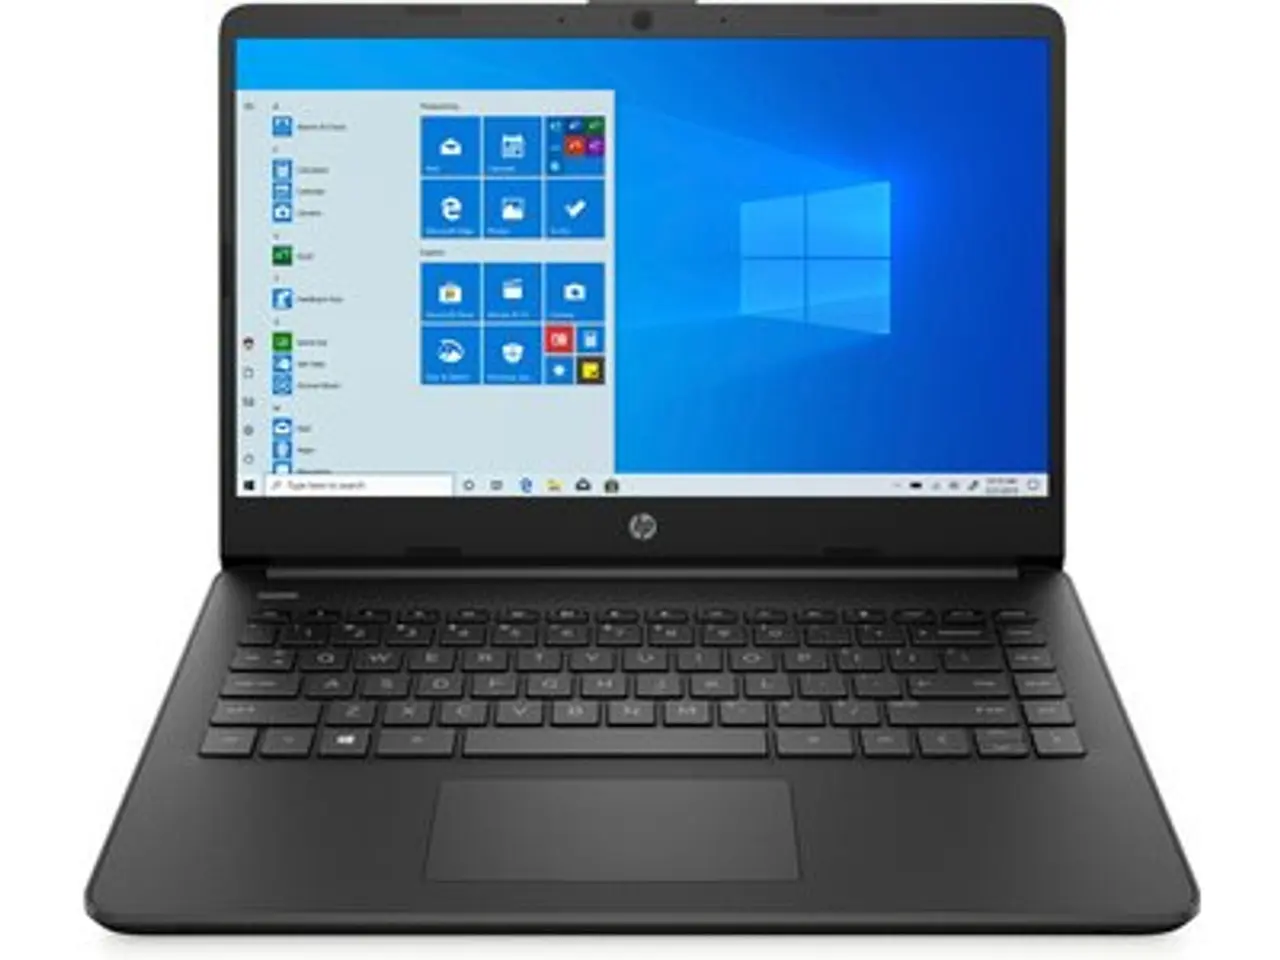 hewlett packard laptop windows 10 - How do I install Windows 10 on my old HP laptop